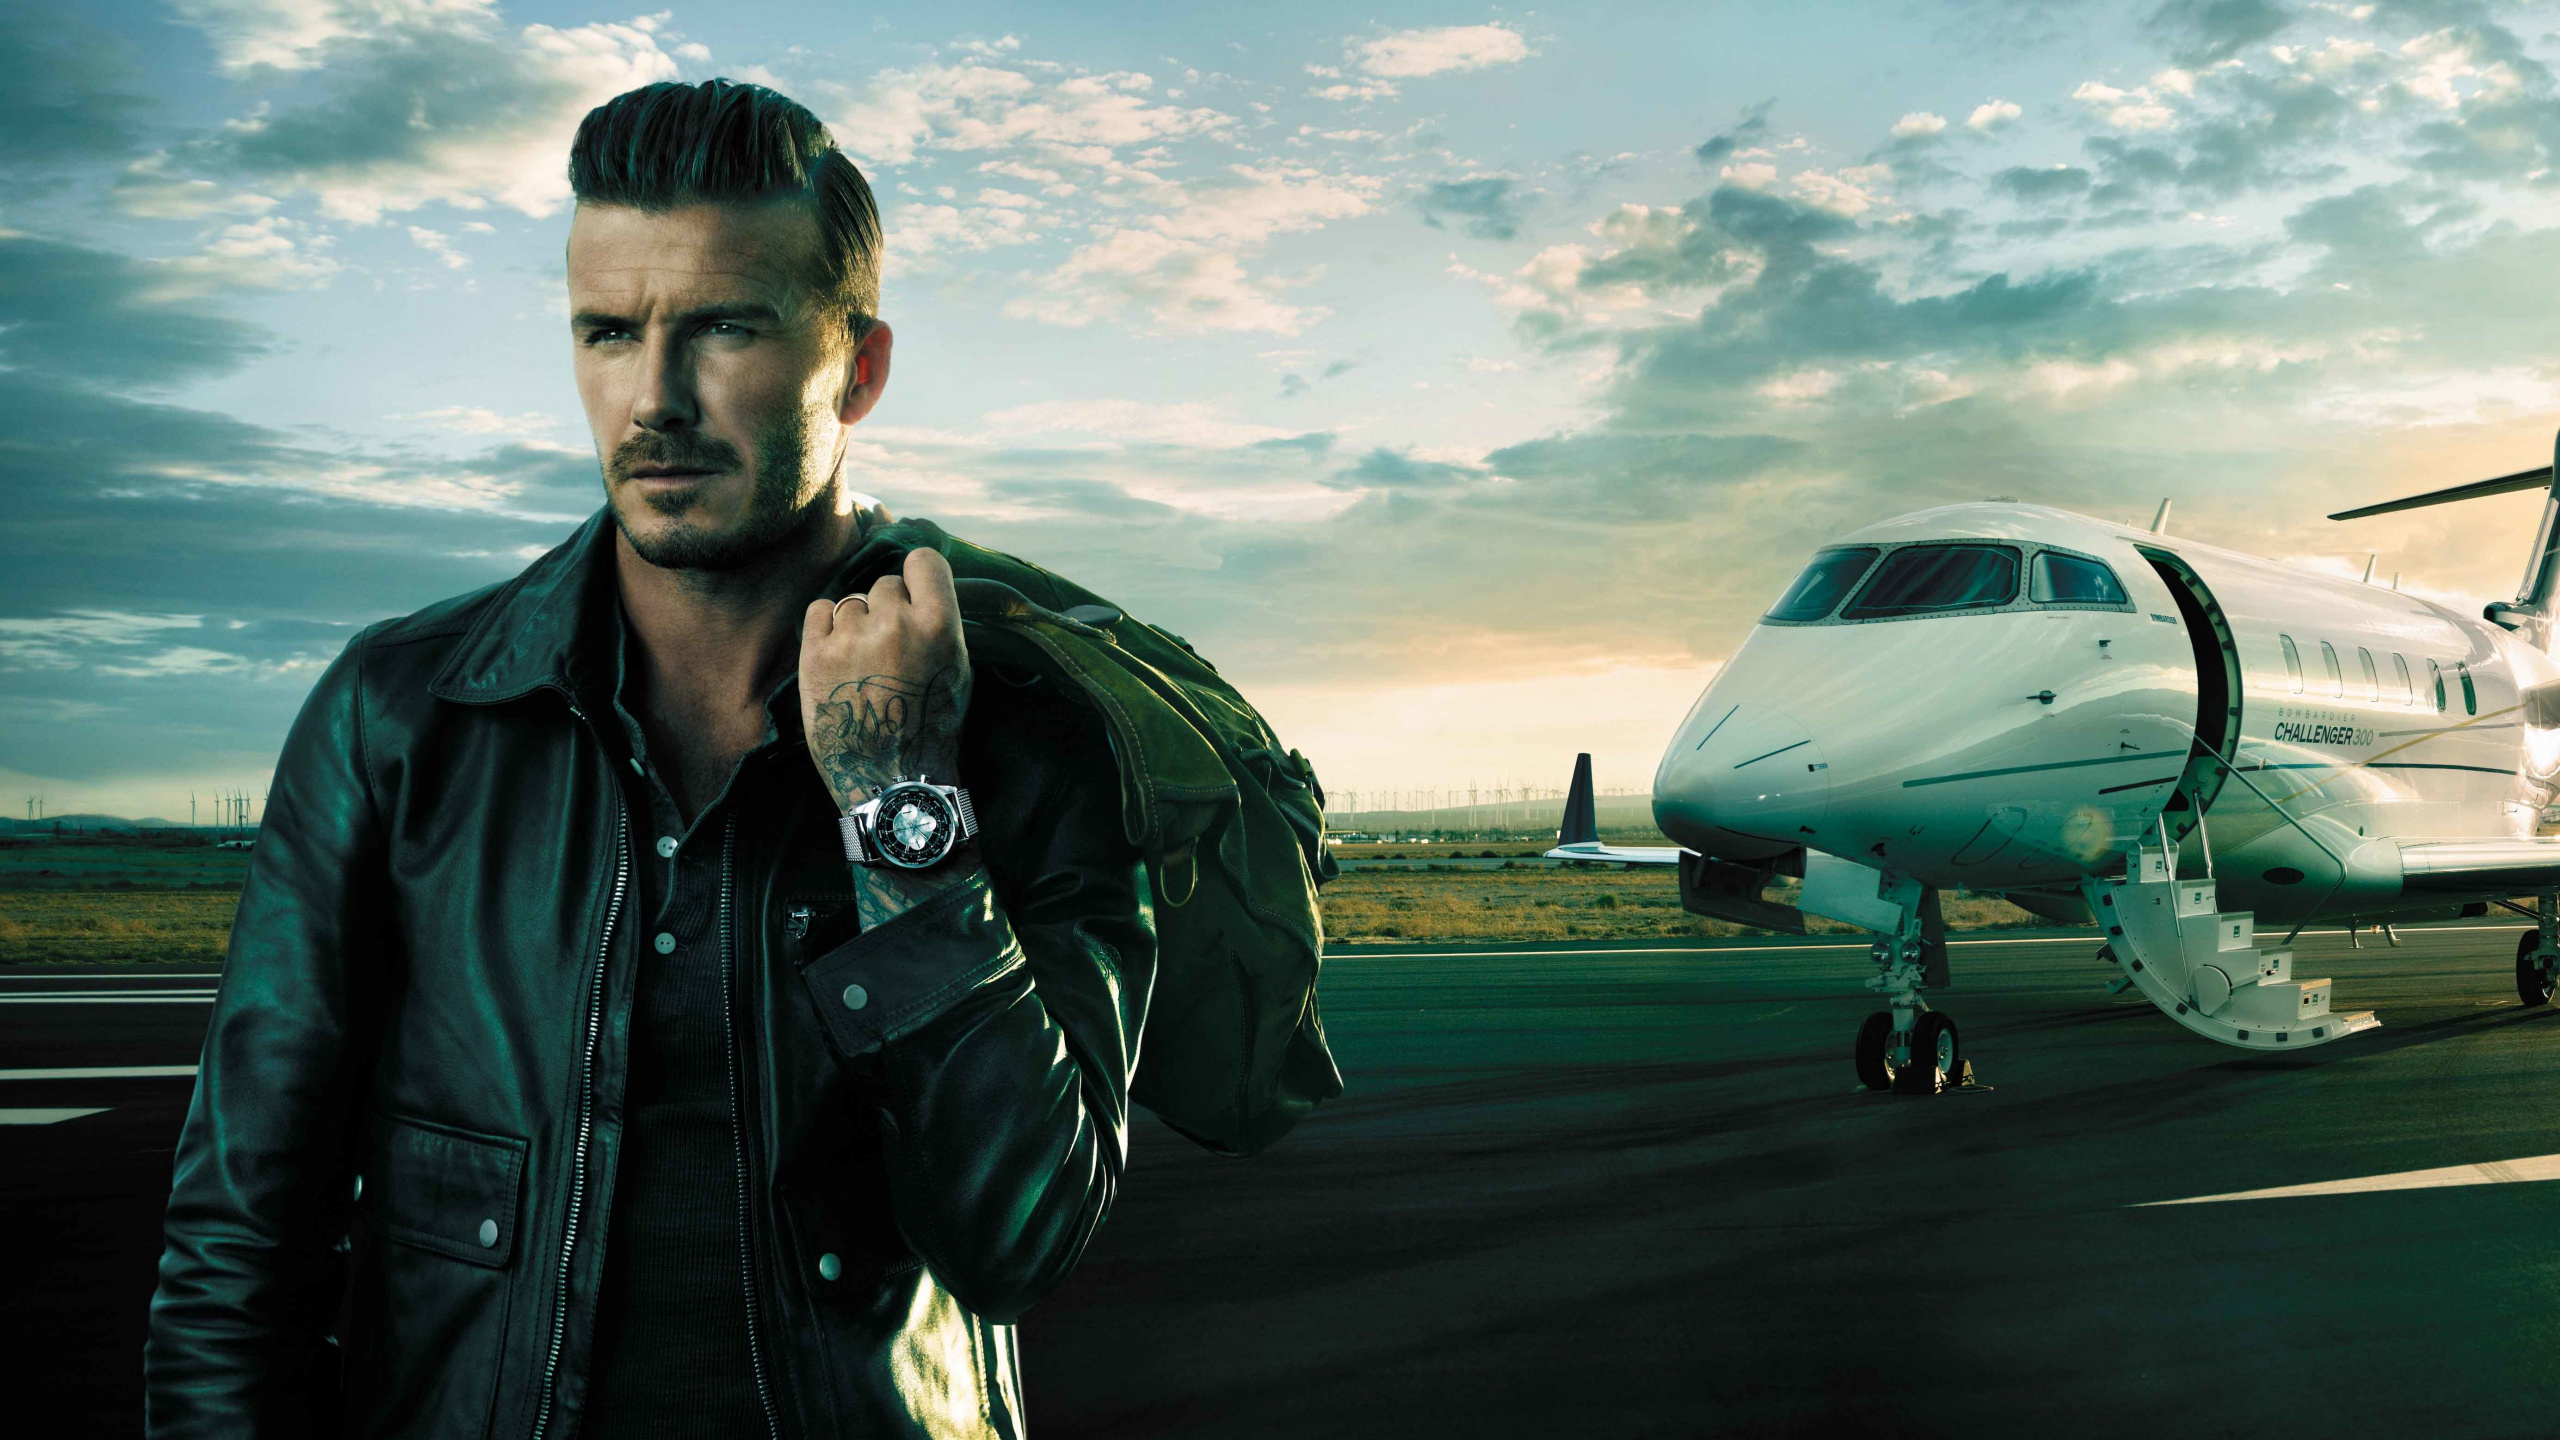 David Beckham, Breitling SA, Aerospace Engineering, Airplane, Air Travel. Wallpaper in 2560x1440 Resolution